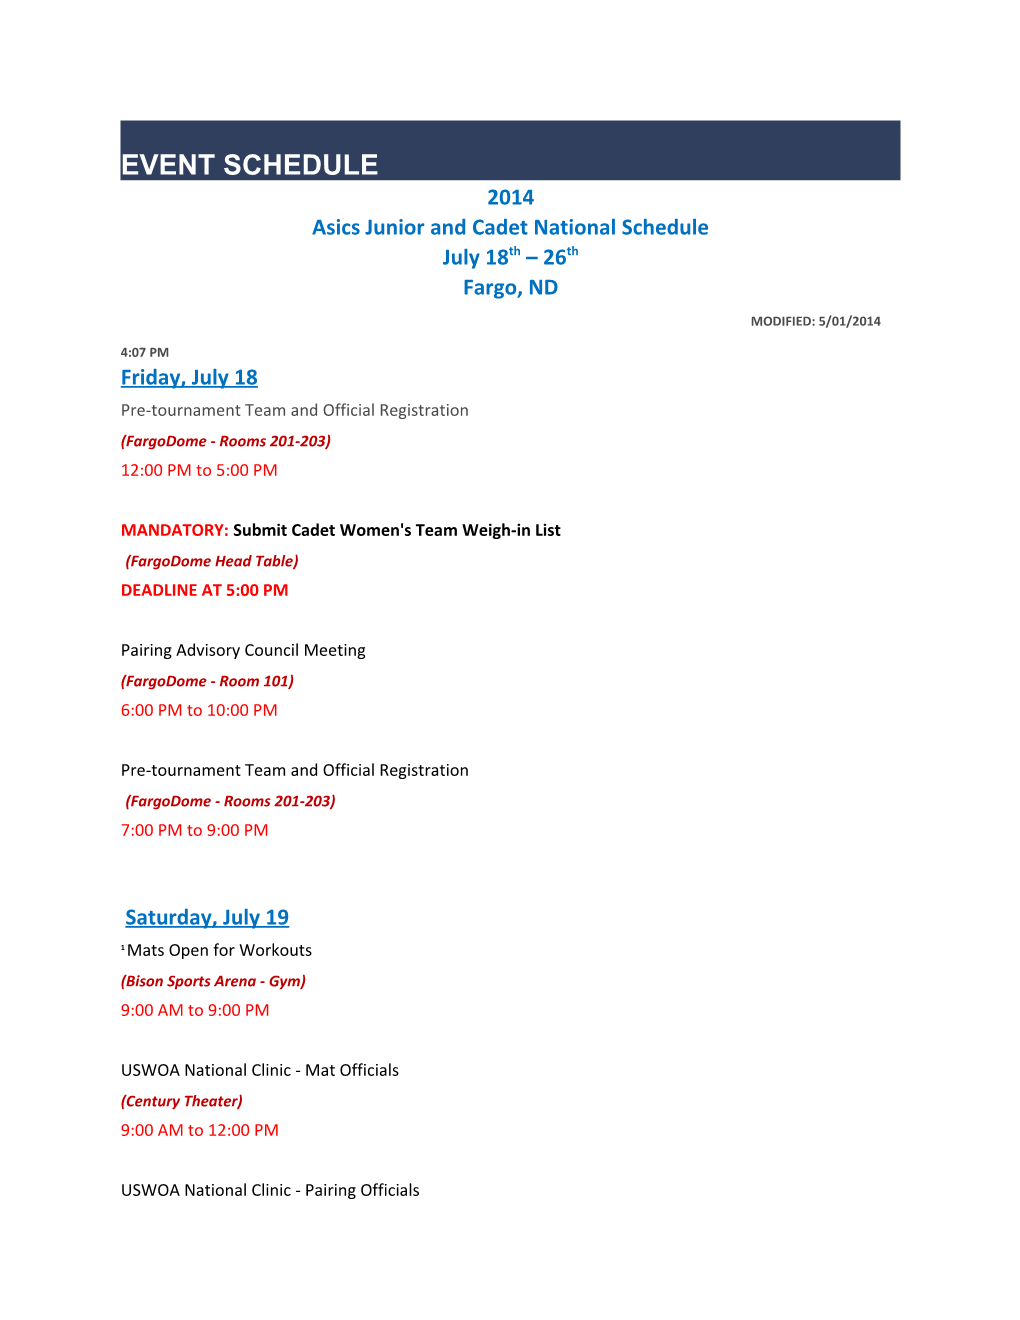 Asics Junior and Cadet National Schedule